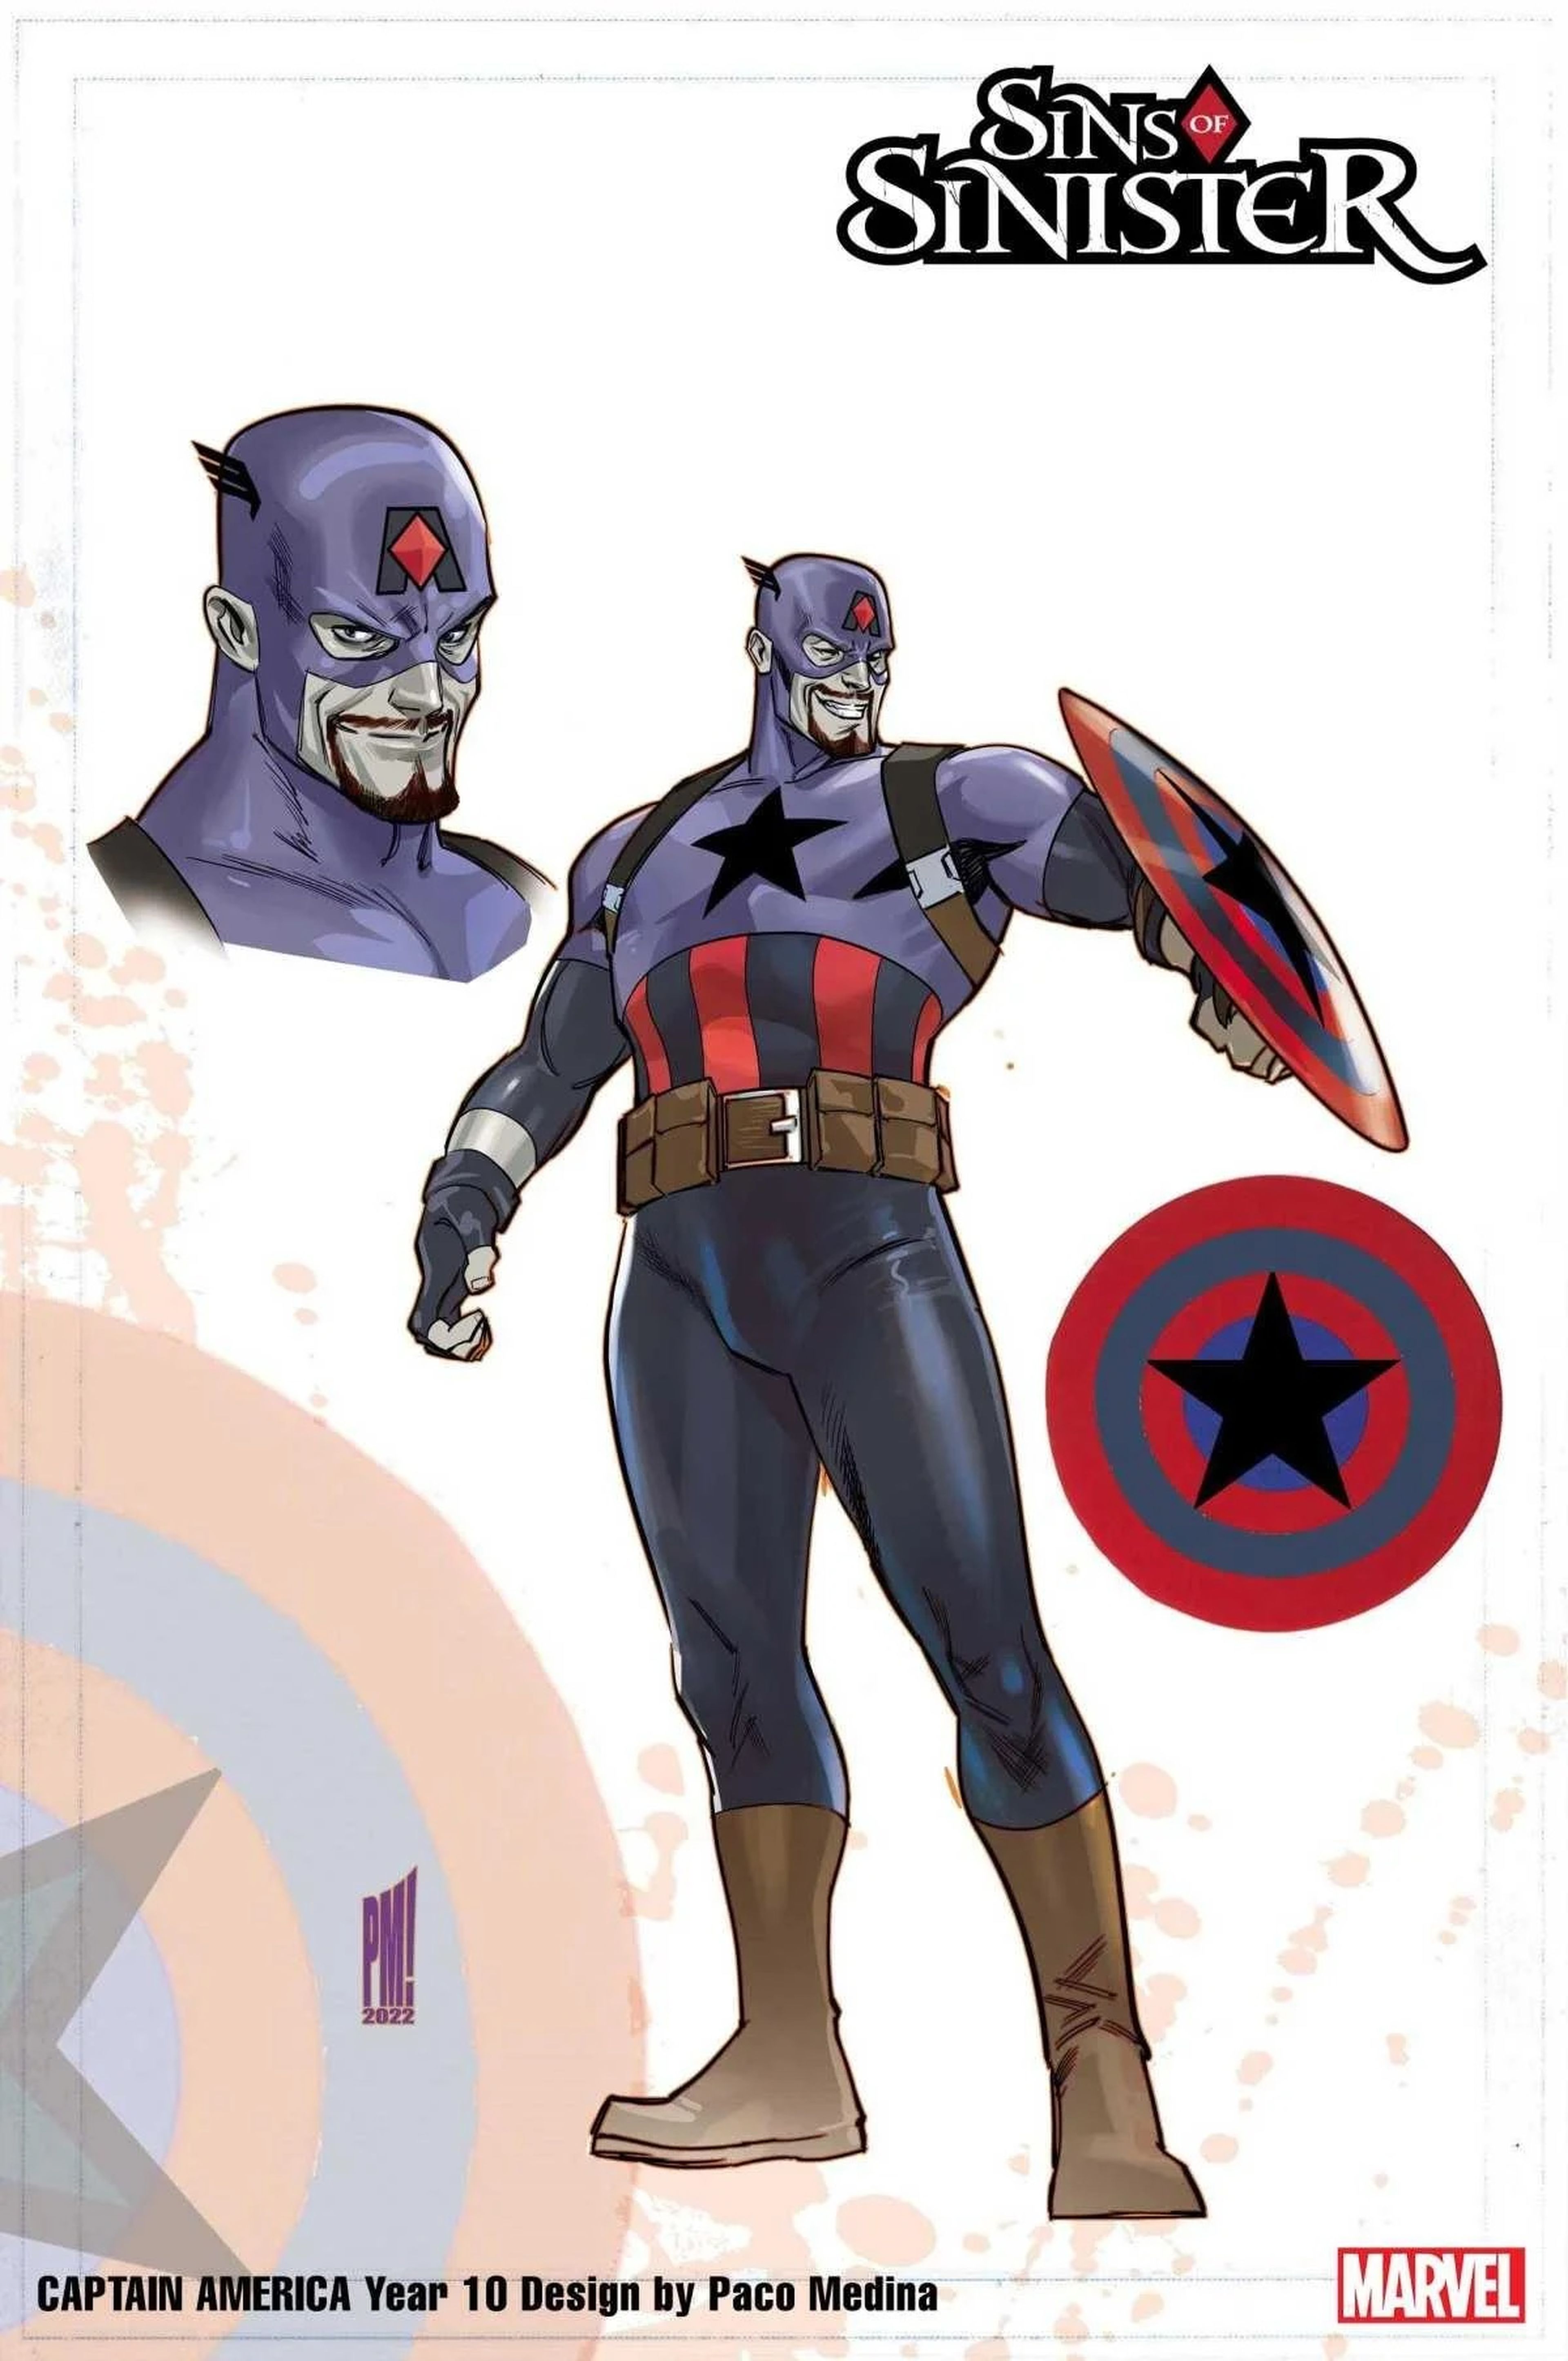 Capitán América en Sins of Sinister (Marvel Comics)